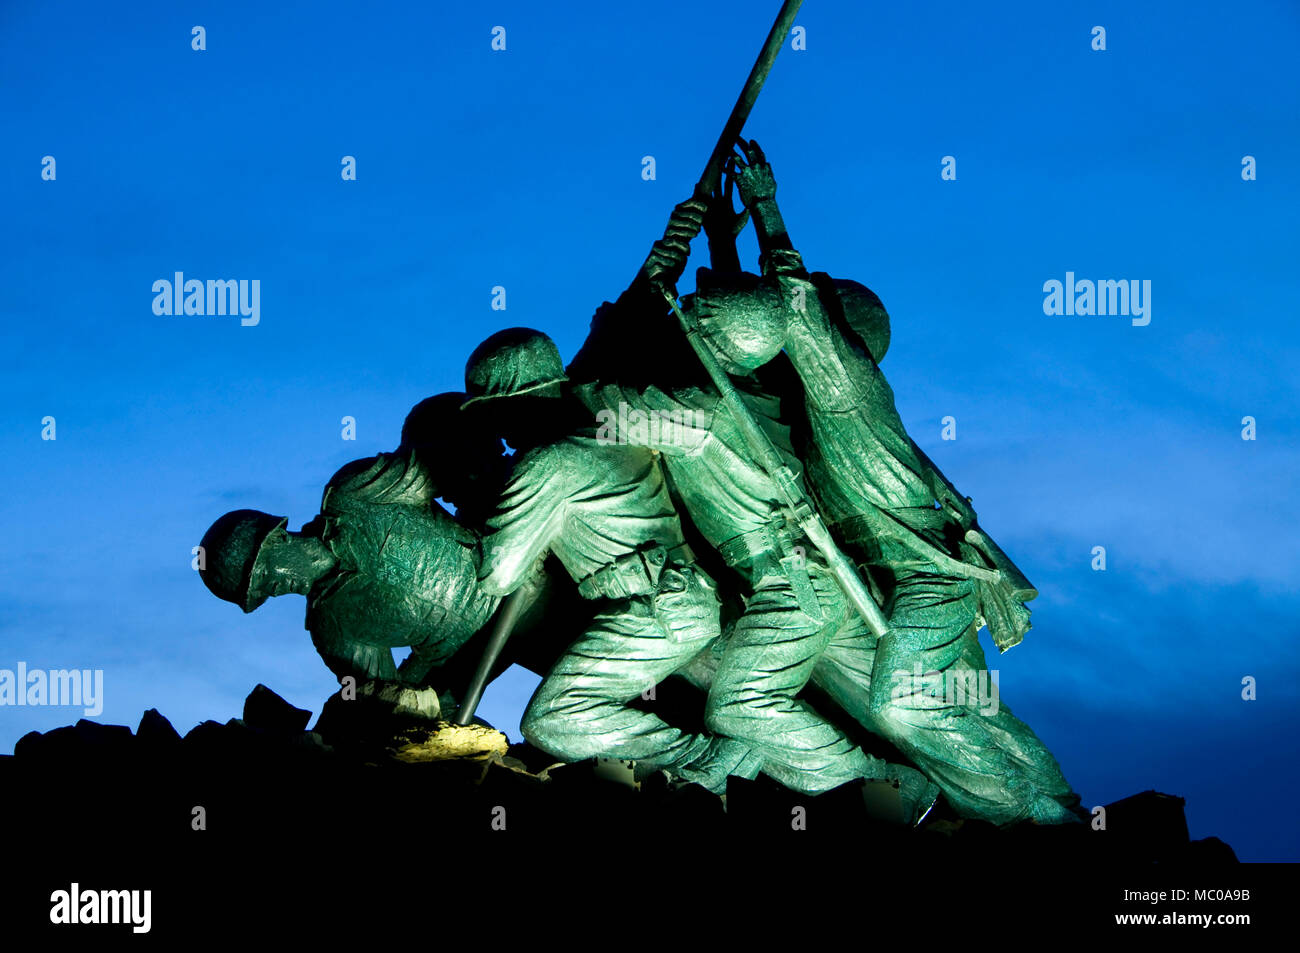 National Iwo Jima Memorial Monument, Iwo Jima Survivors Memorial Park, New Britain, Connecticut Stock Photo